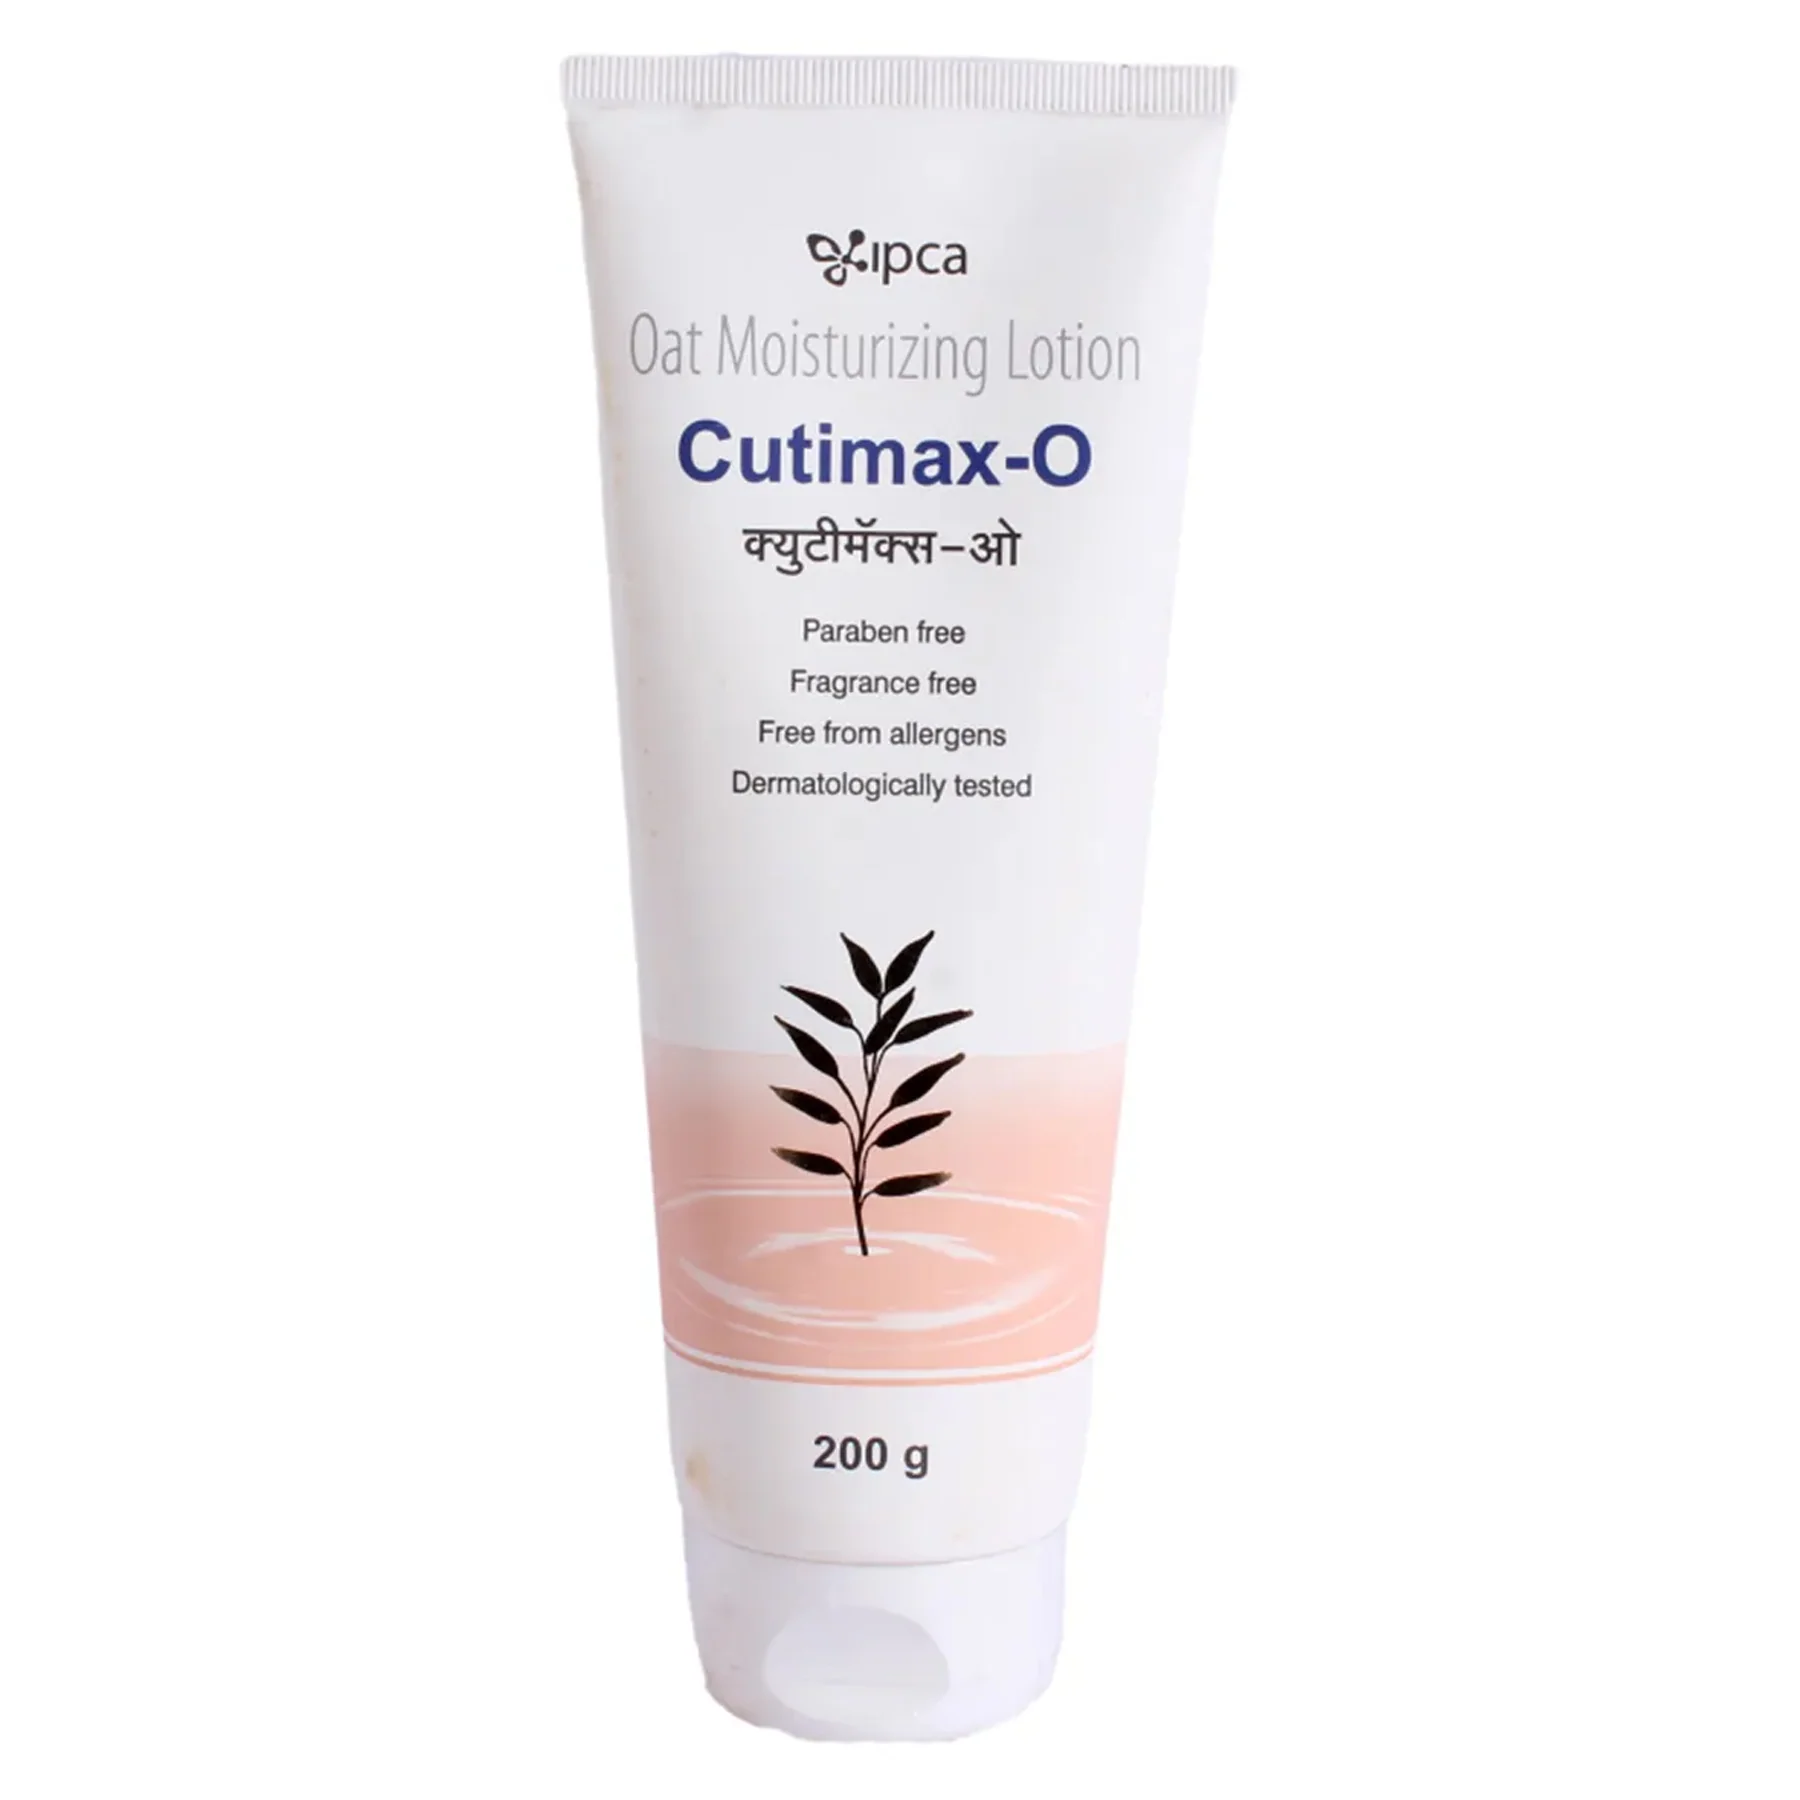 Cutimax-O Oat Moisturizing Lotion | Paraben, Allergen & Fragrance-Free